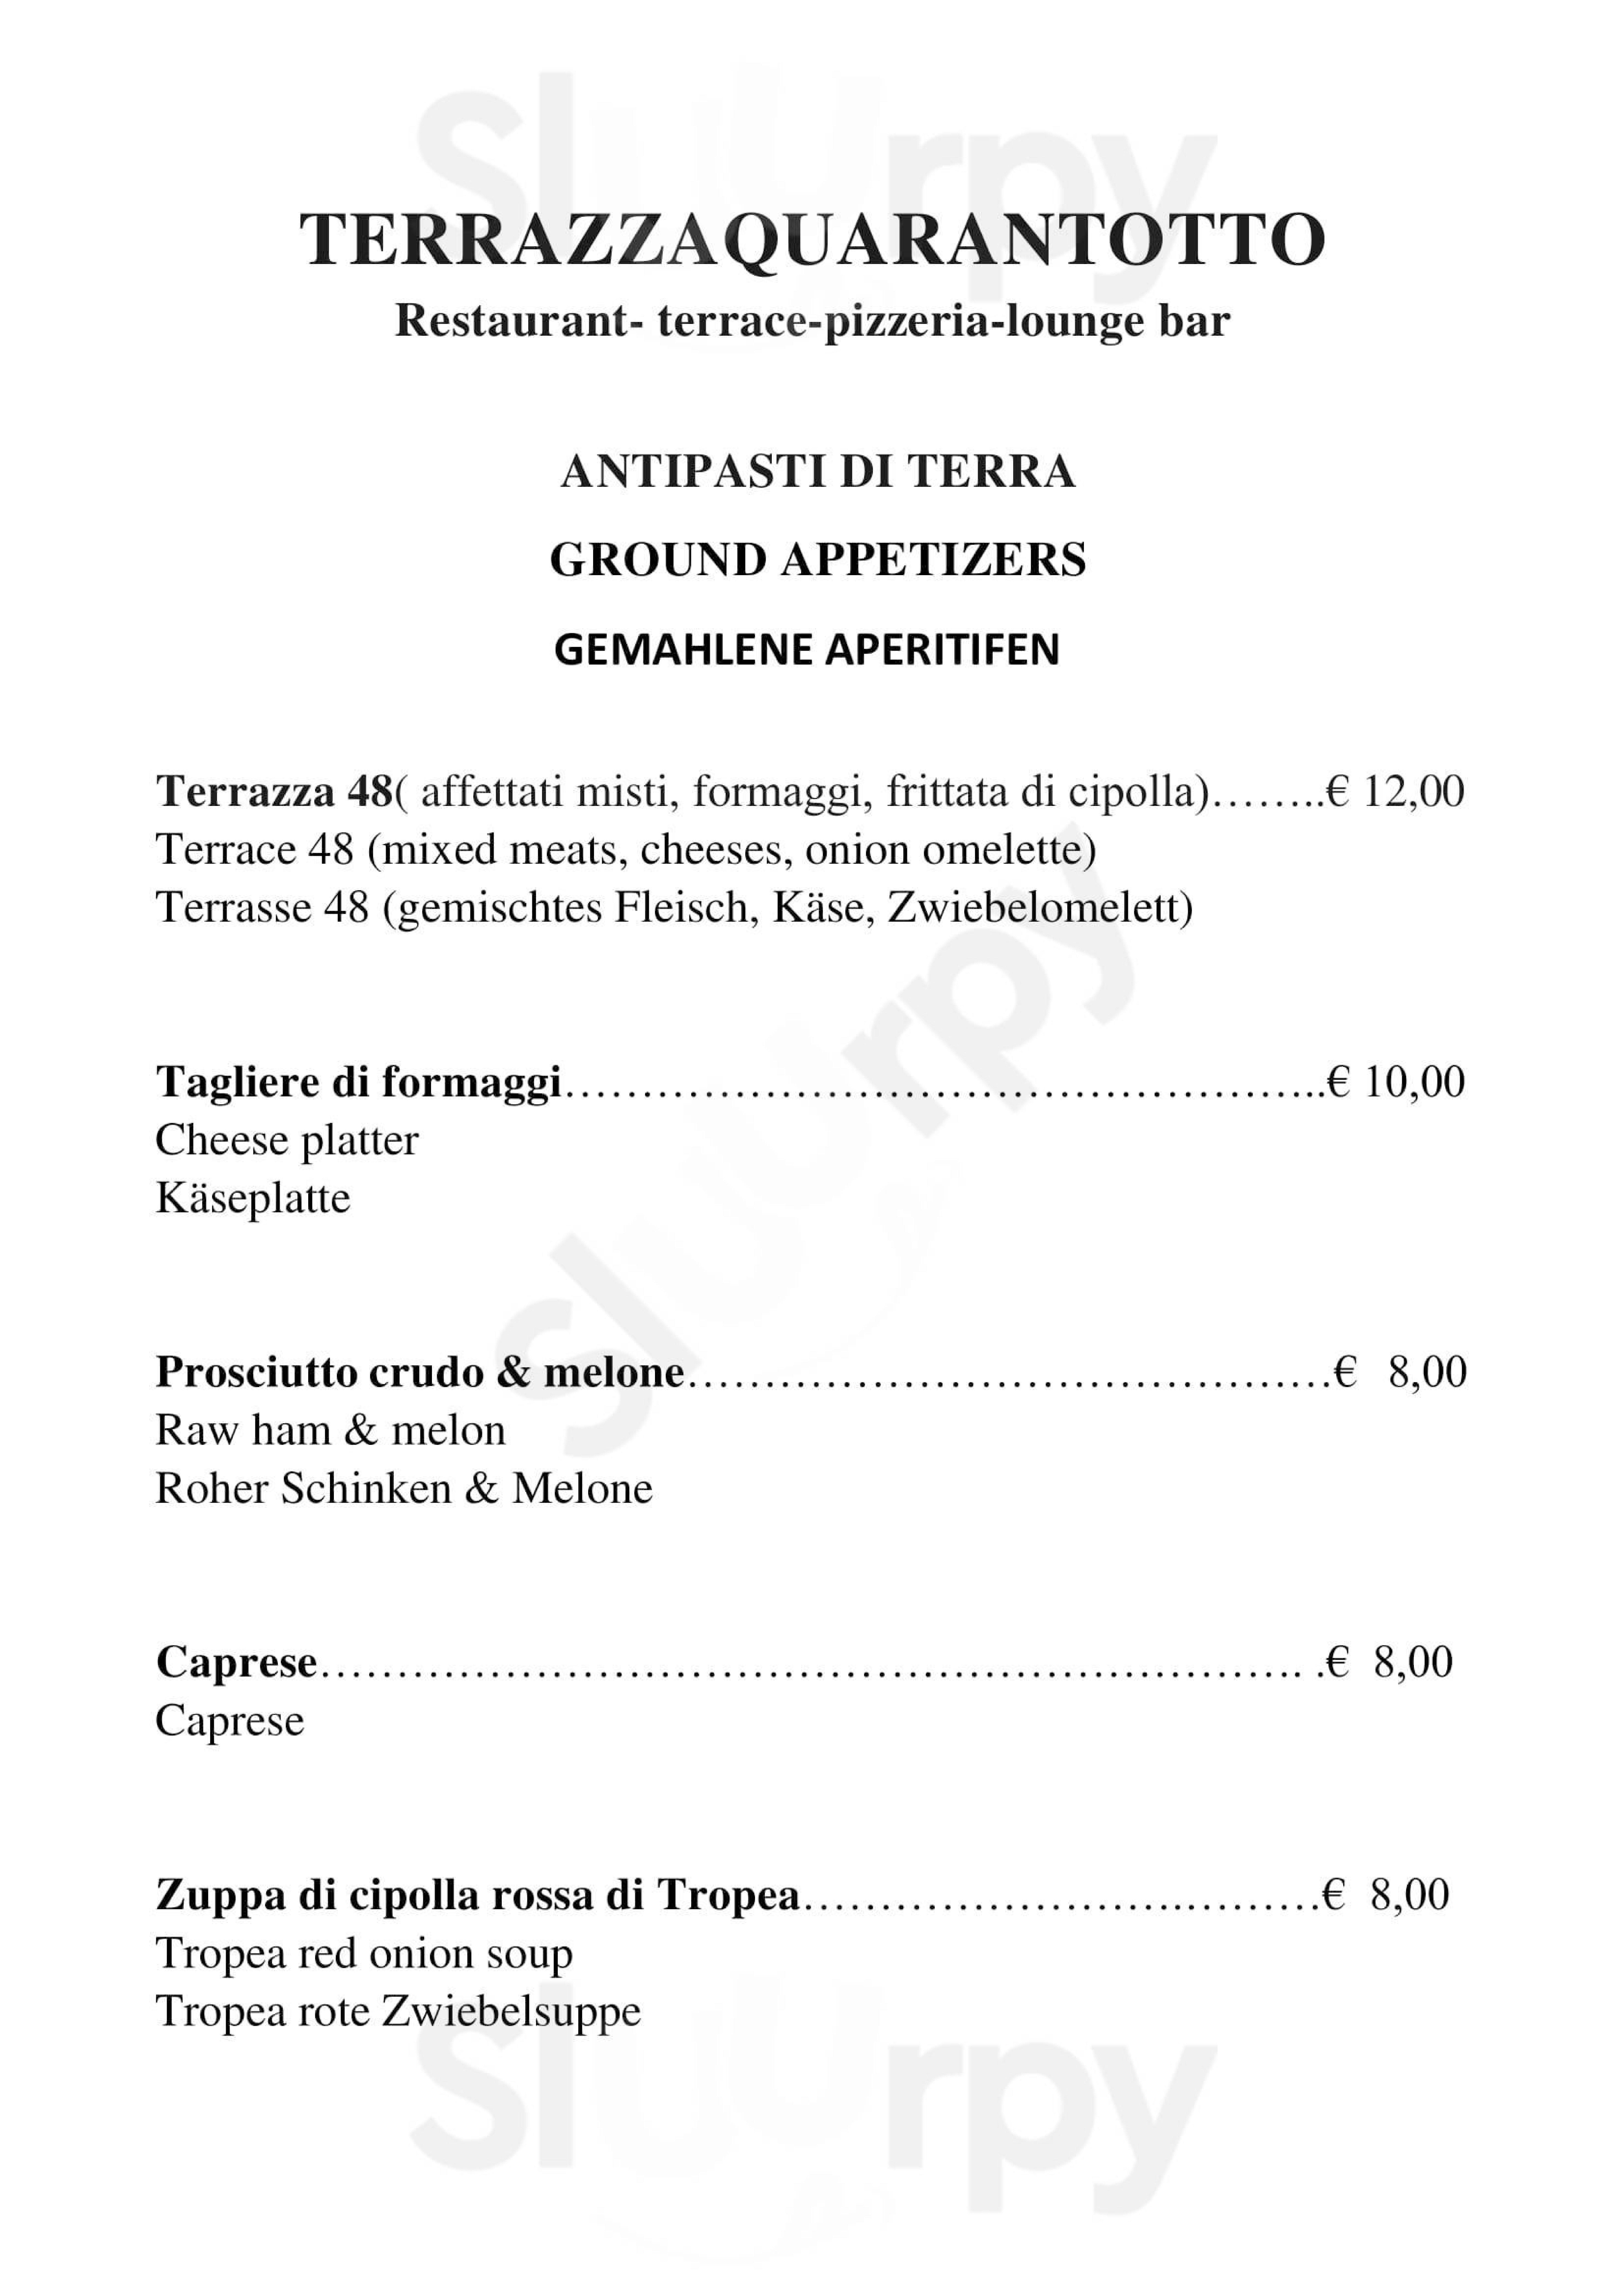 Terrazza 48 restaurant pizzeria lounge bar Tropea menù 1 pagina